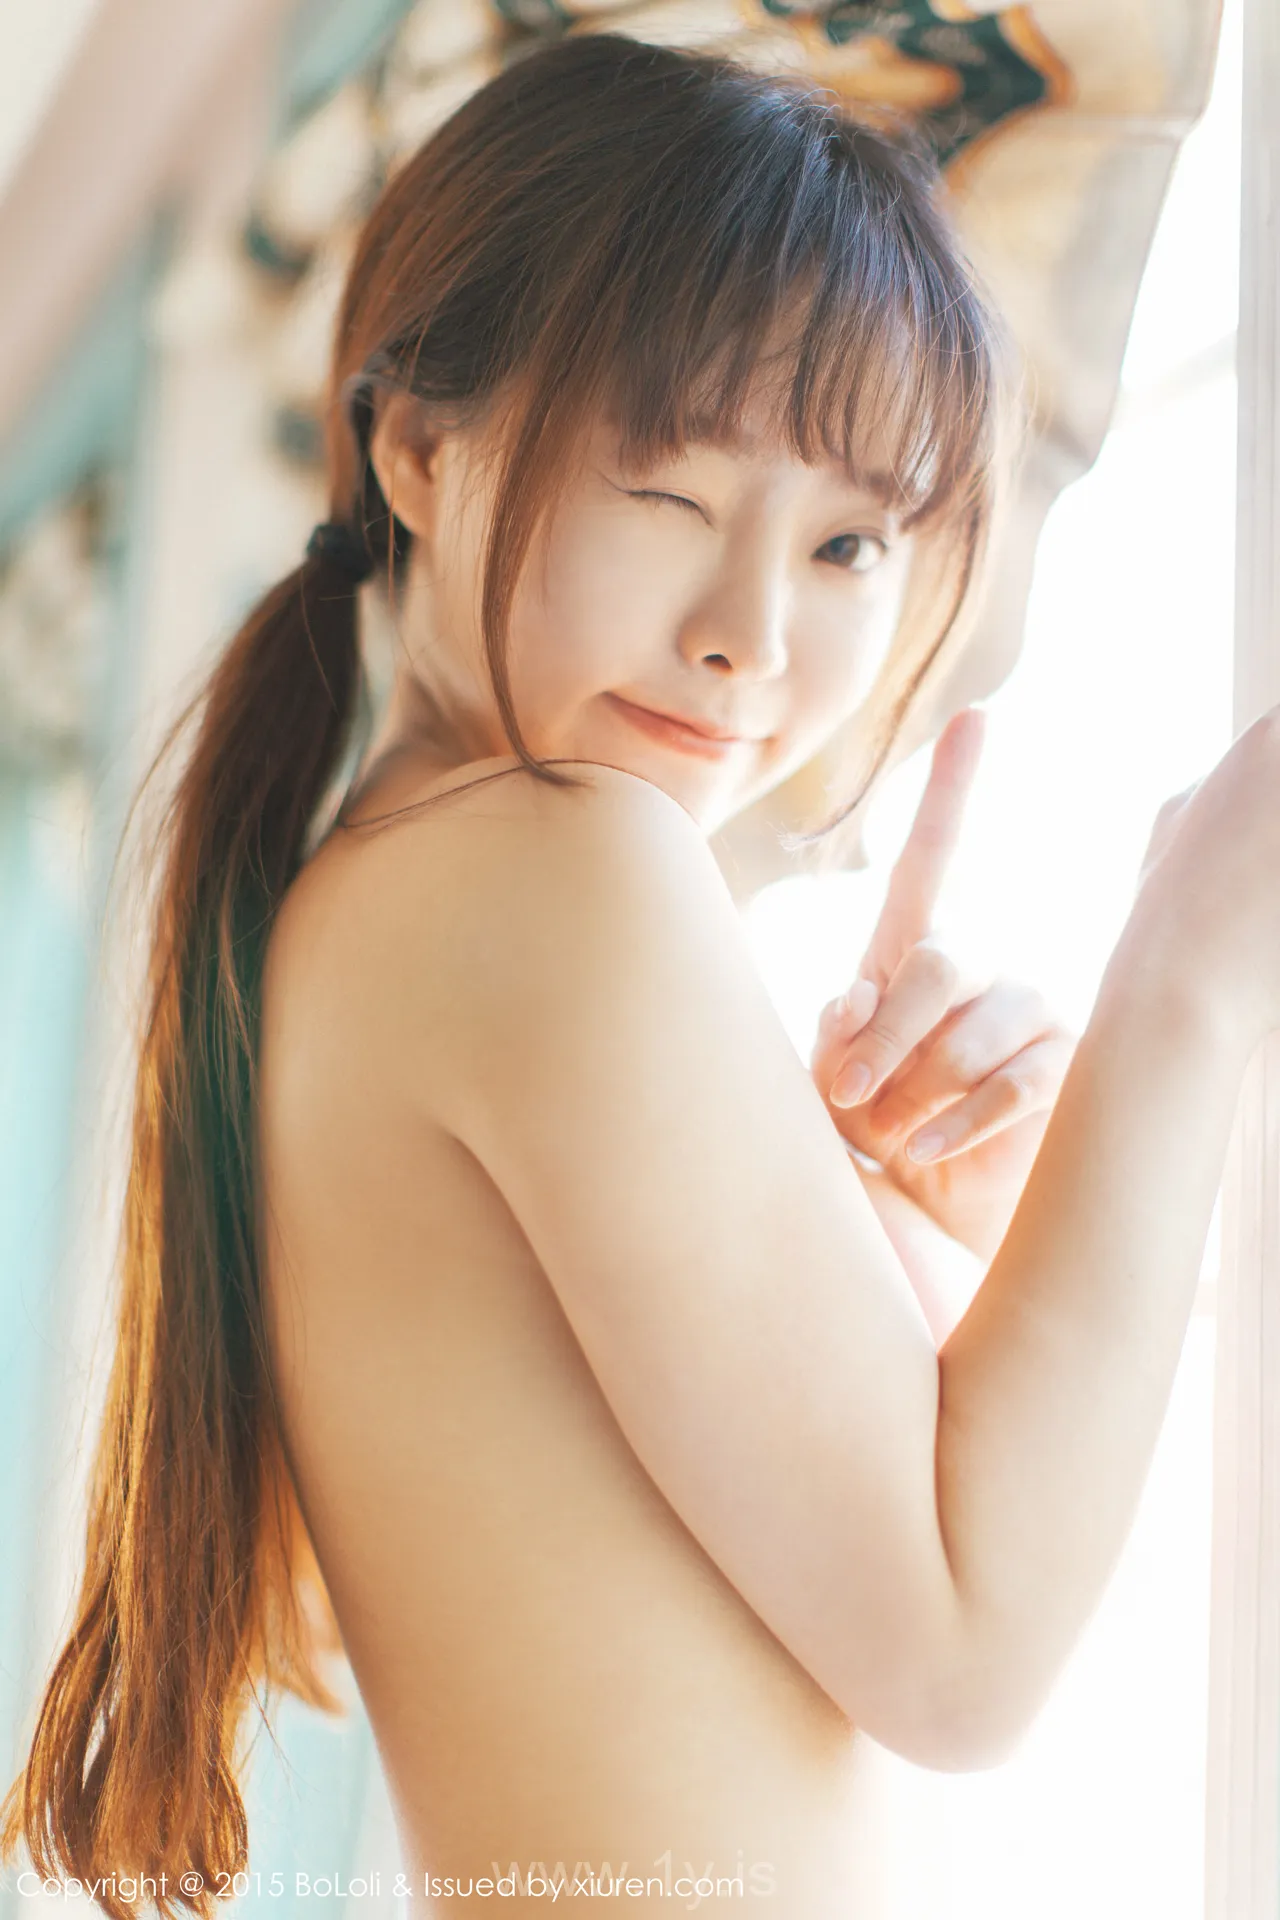 Bololi(菠萝社) Vol.011柳侑绮Sevenbaby Cute & Lovely Asian Mature Princess 柳侑绮Sevenbaby